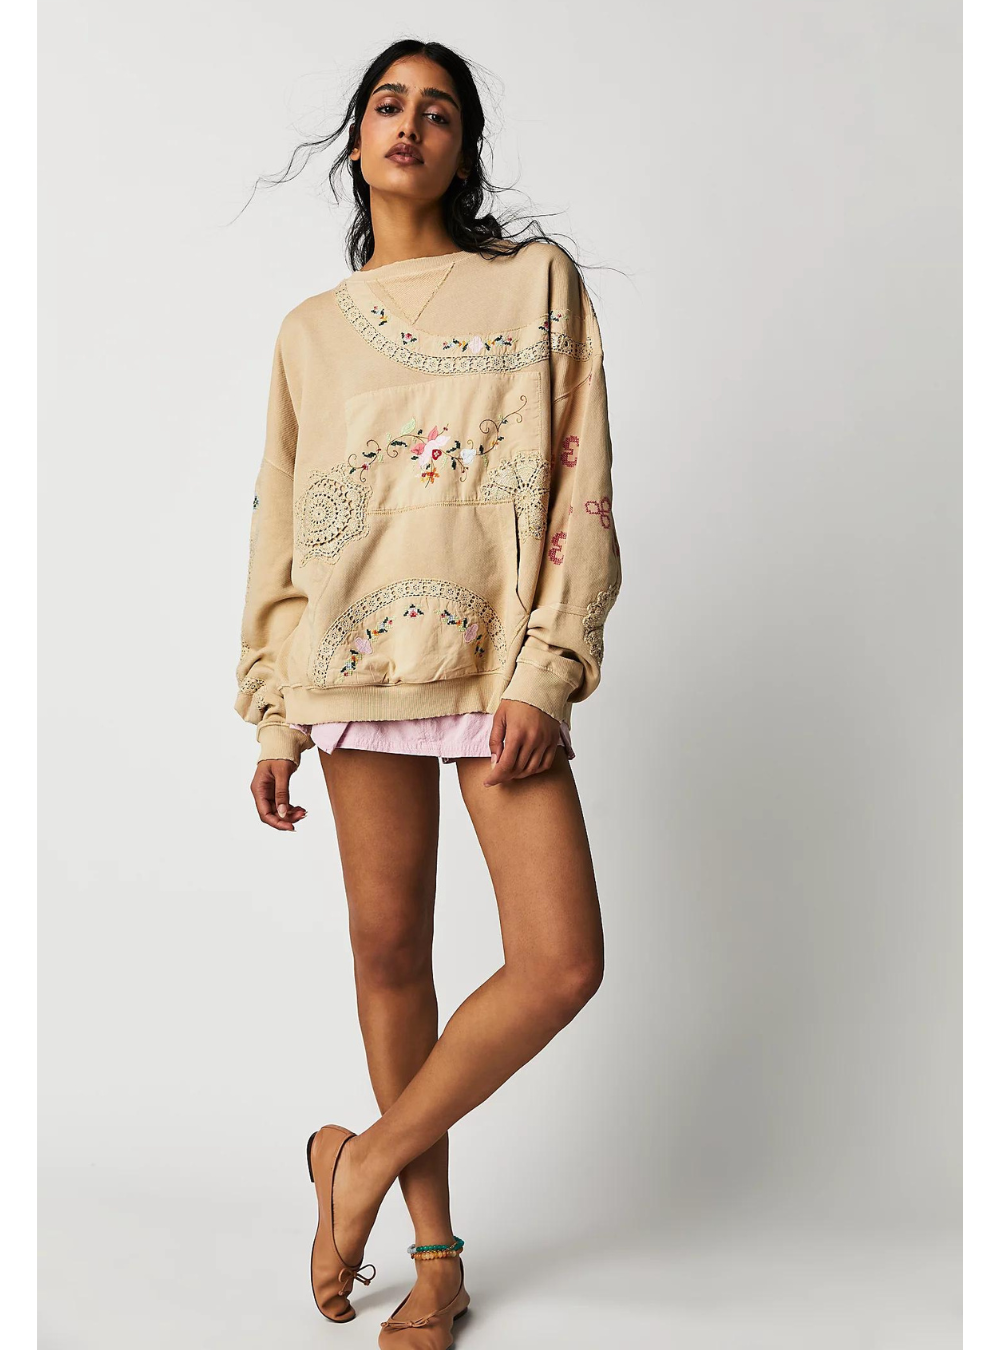 Grams Attic Sweatshirt - Mushroom Combo